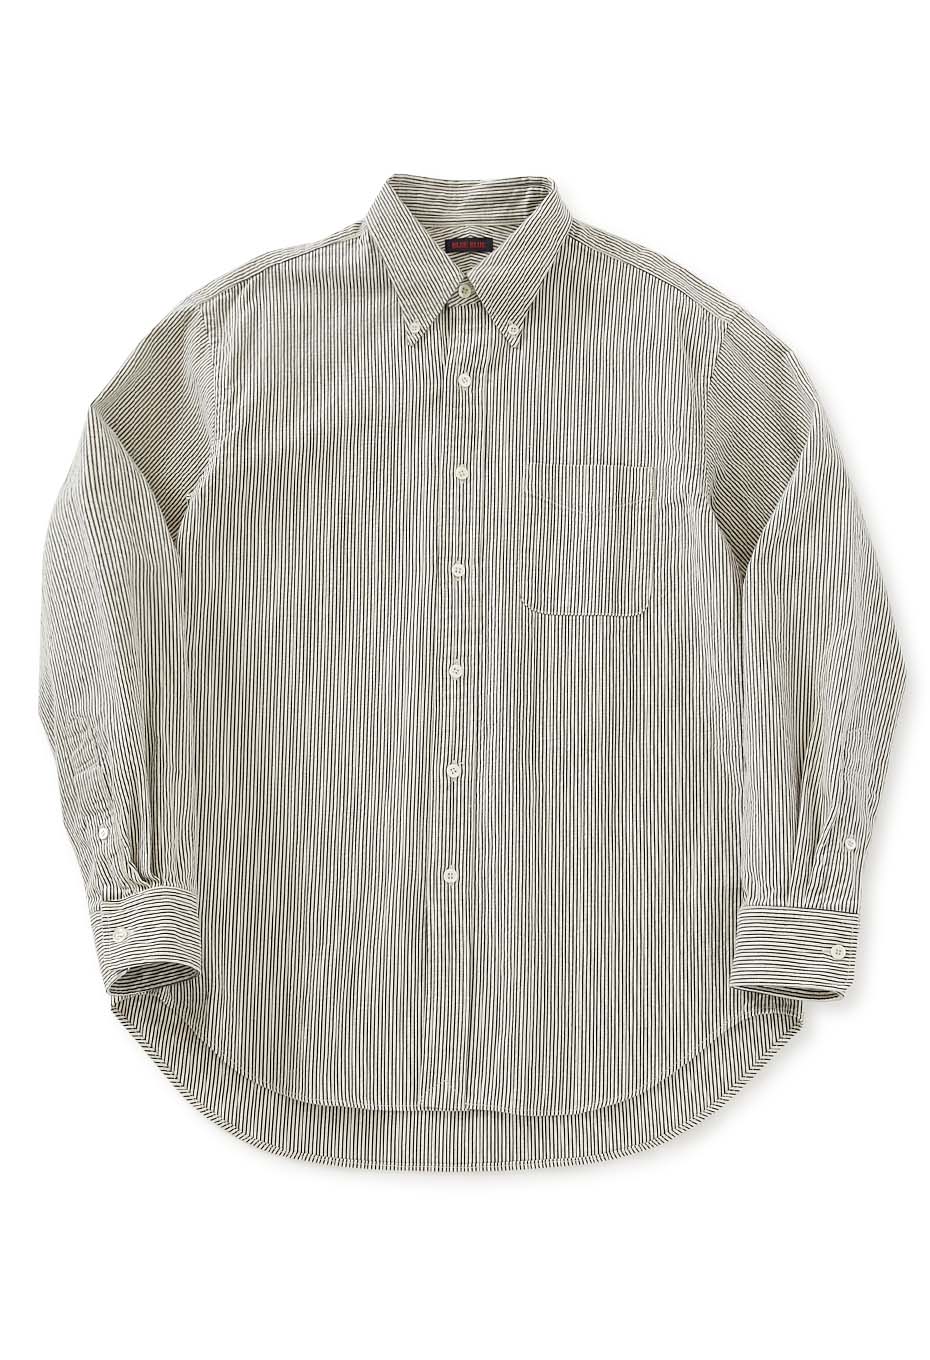 Hickory Stripe Button Down Long Sleeve Shirt